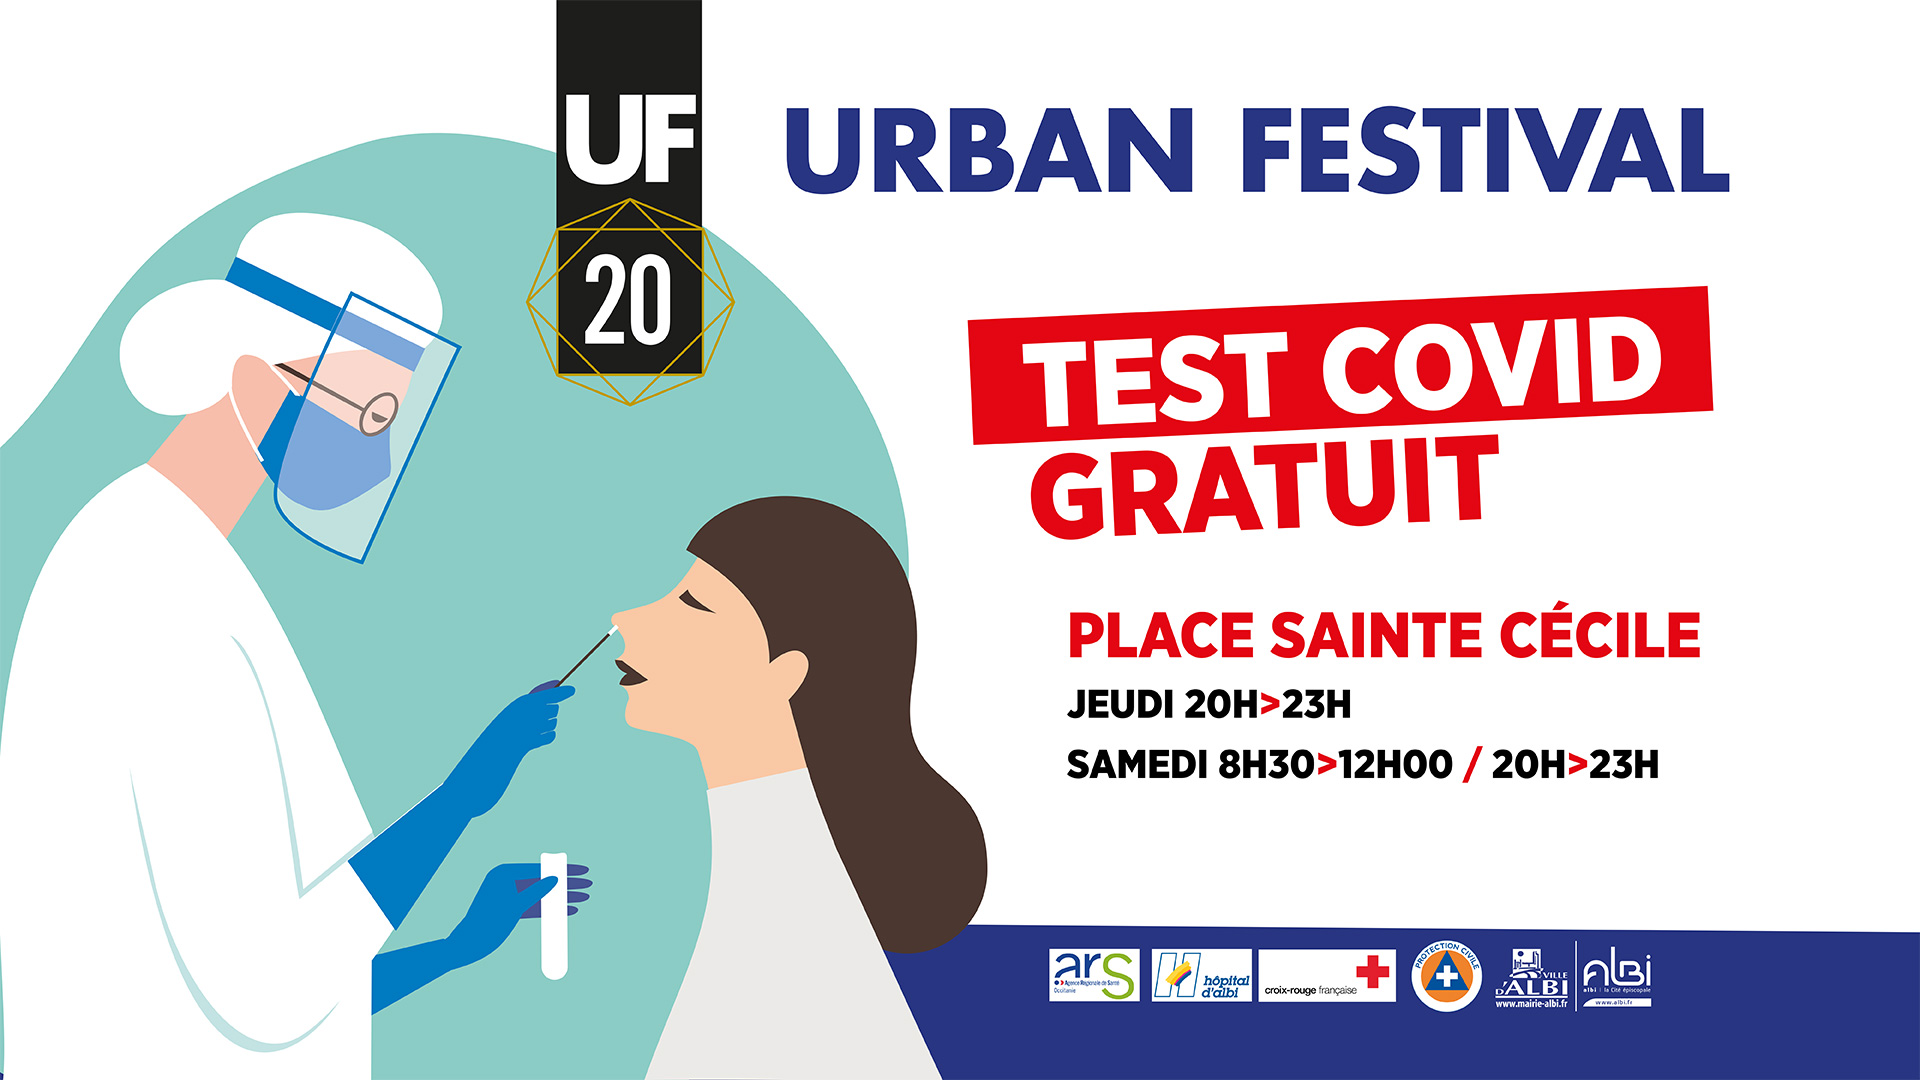 Urban Festival test COVID gratuits